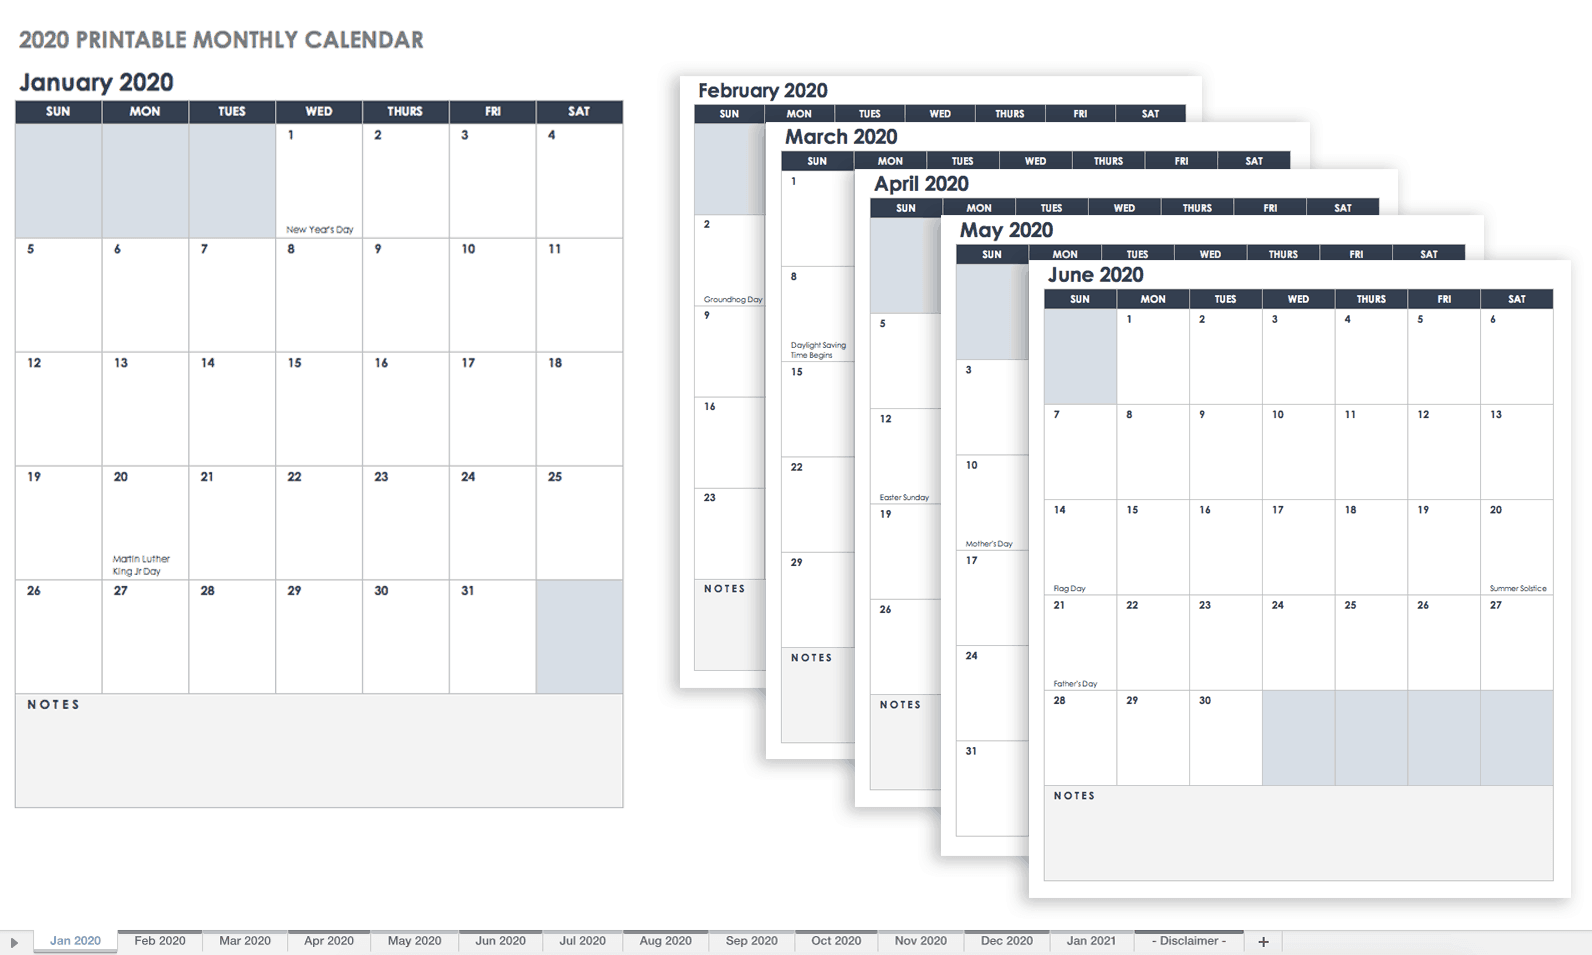 Calendario mensual 2020 para imprimir (vertical)